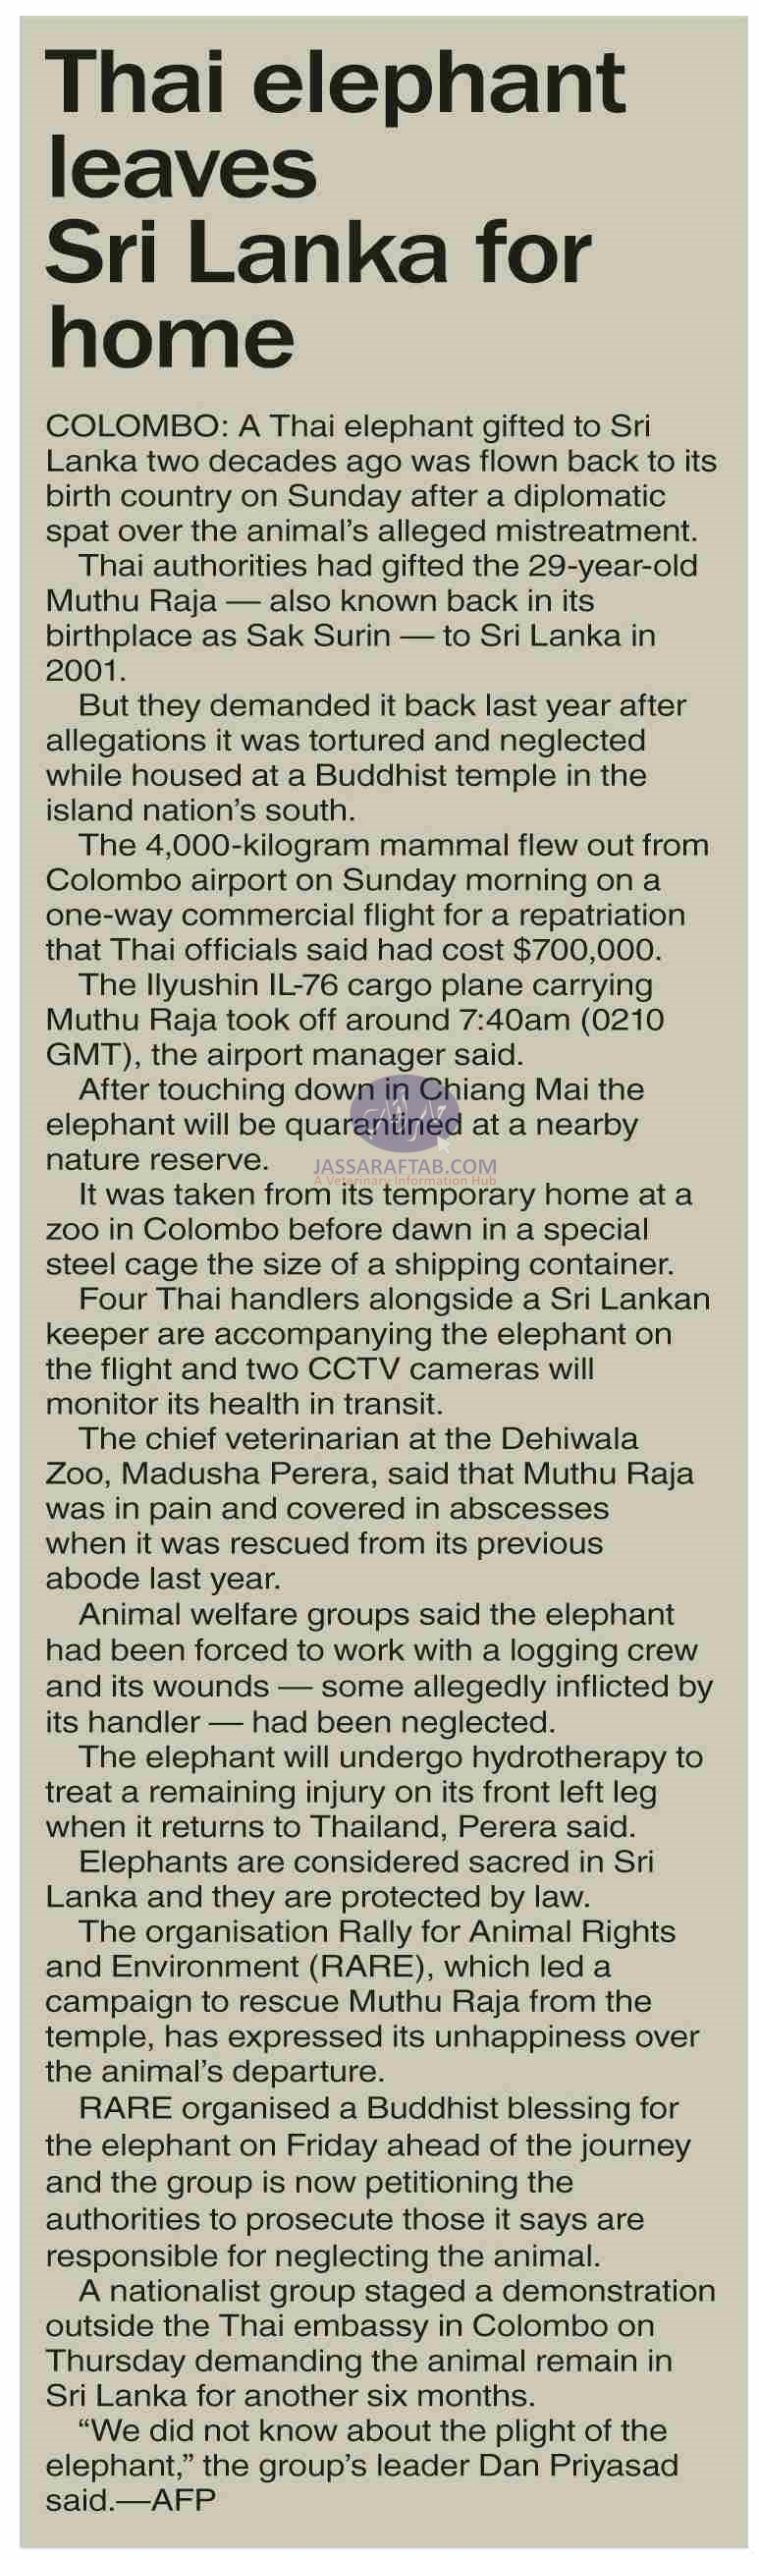 Thai elephant Muthu Raja gifted to Sri Lanka